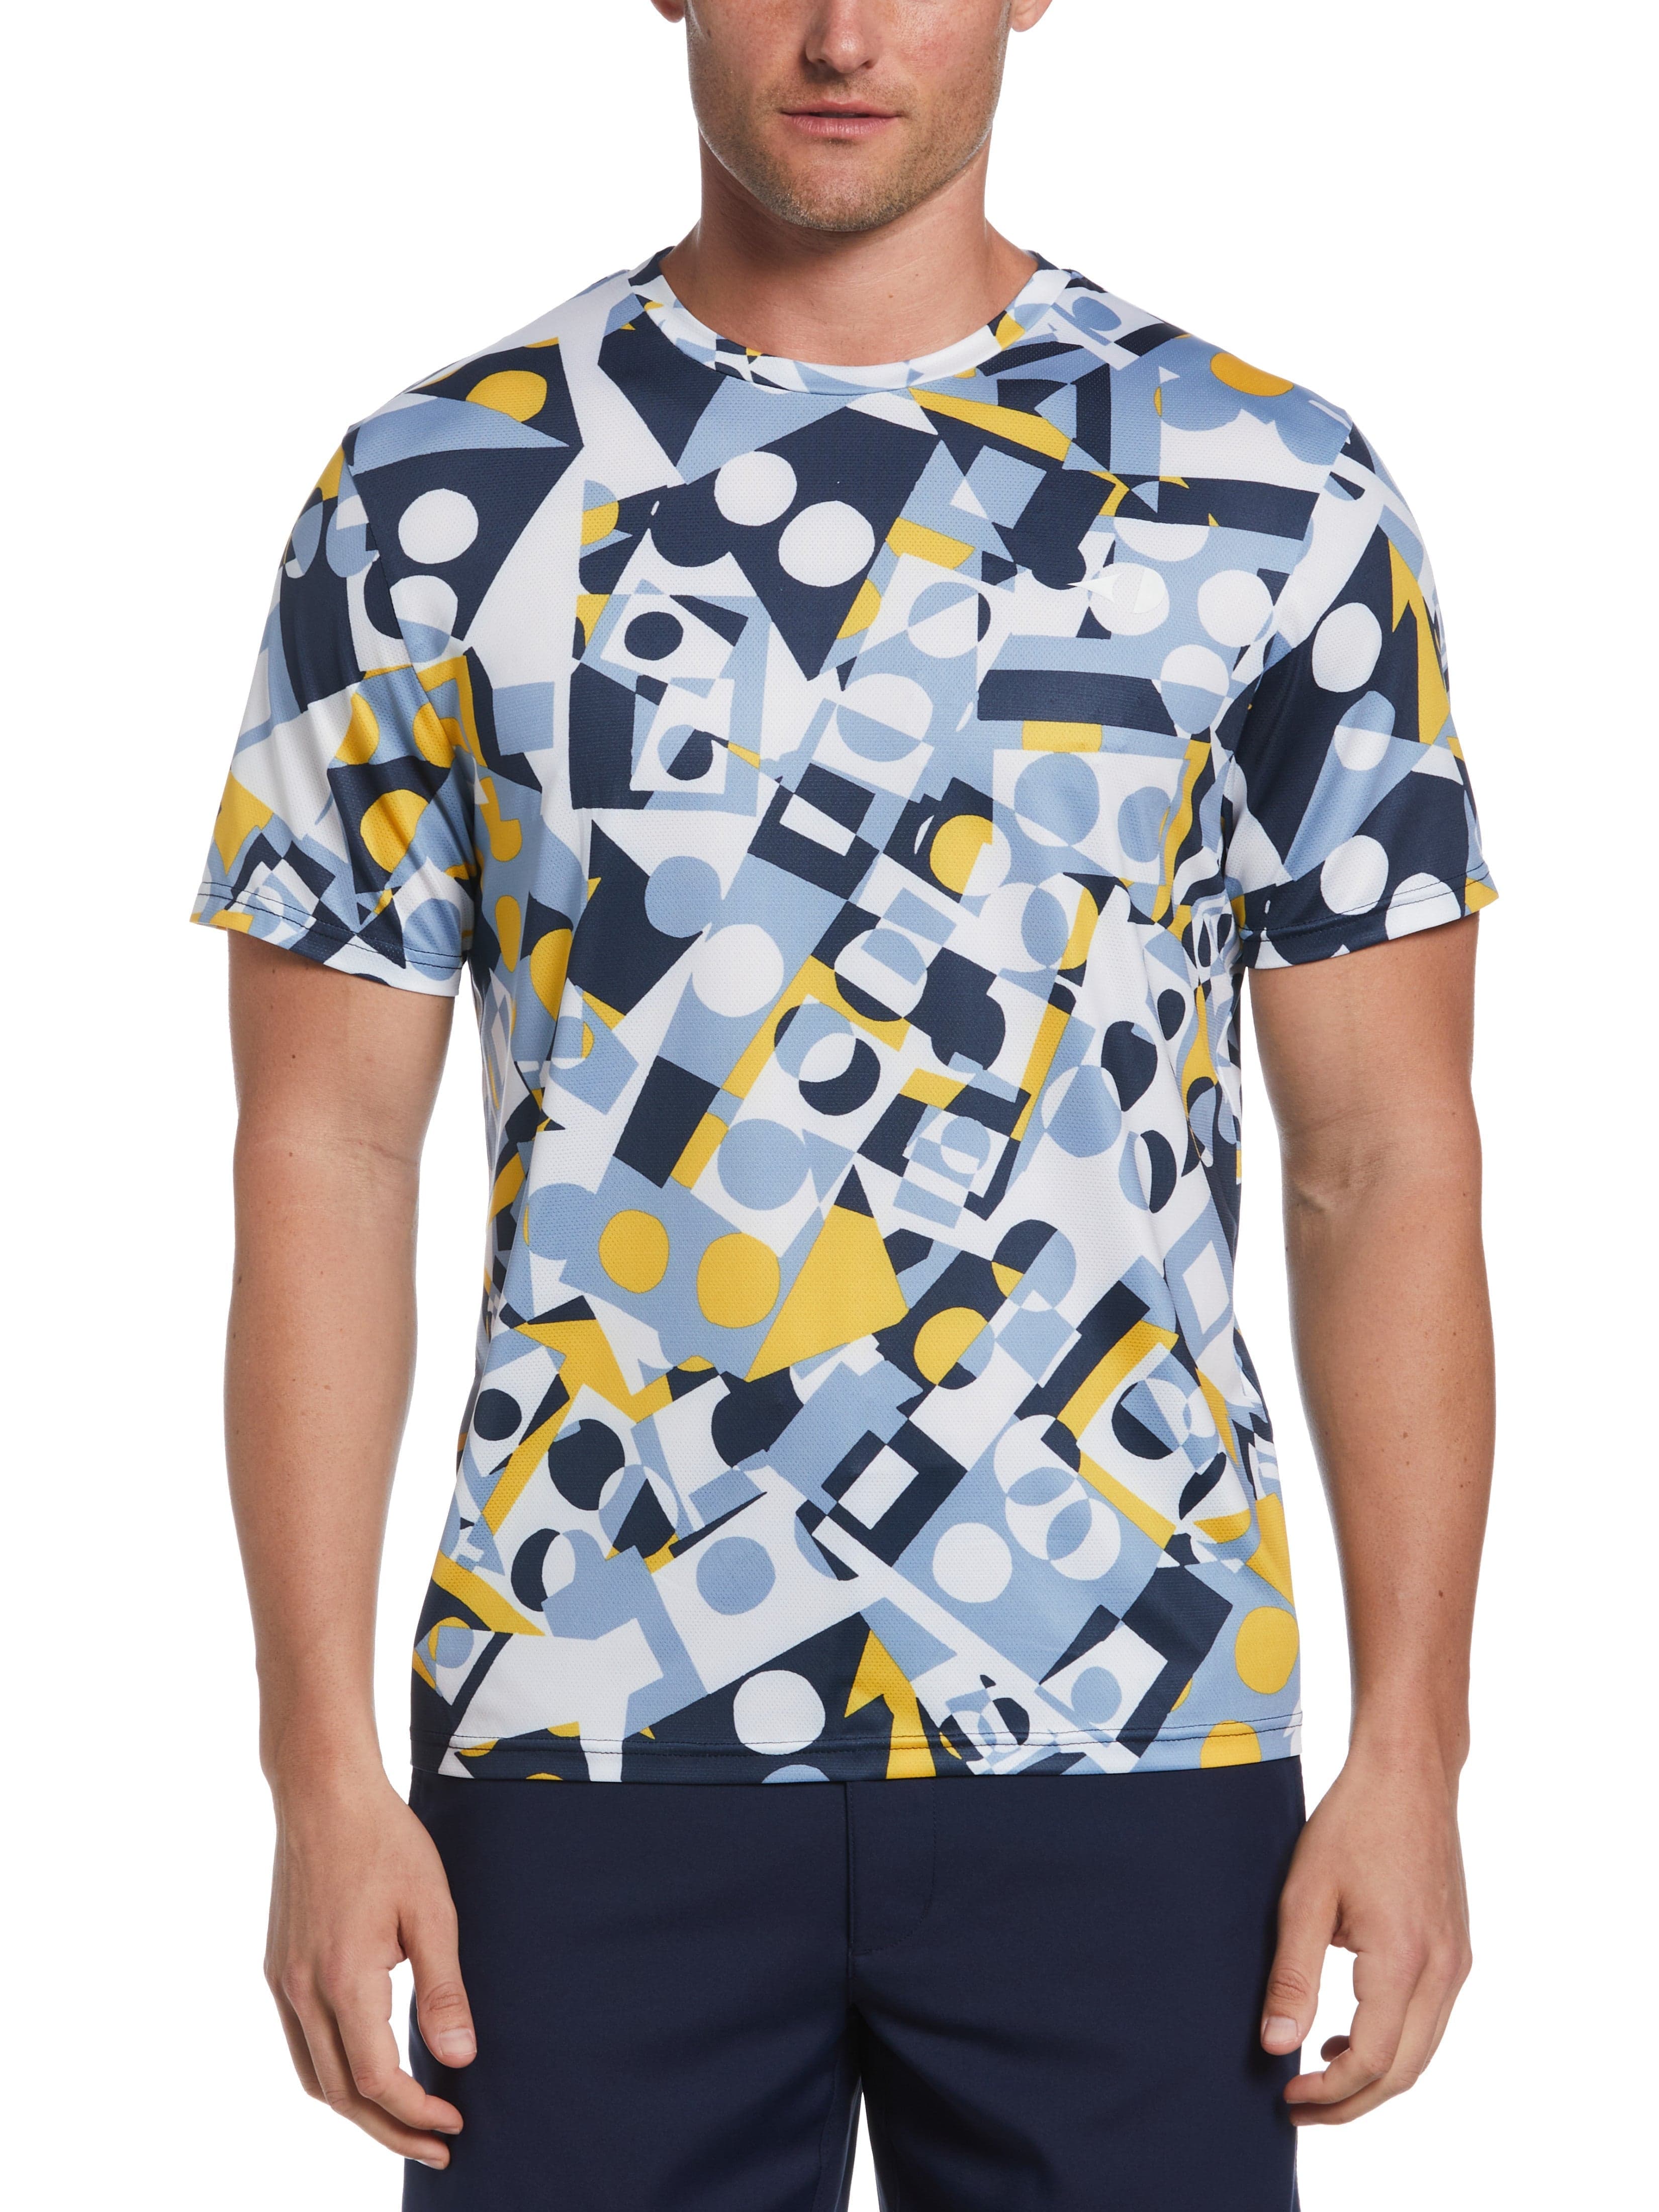 Grand Slam Mens Abstract Multi Geo Printed Crew Neck Tennis Shirt, Size 2XL, Navy Blue, Polyester/Spandex | Golf Apparel Shop